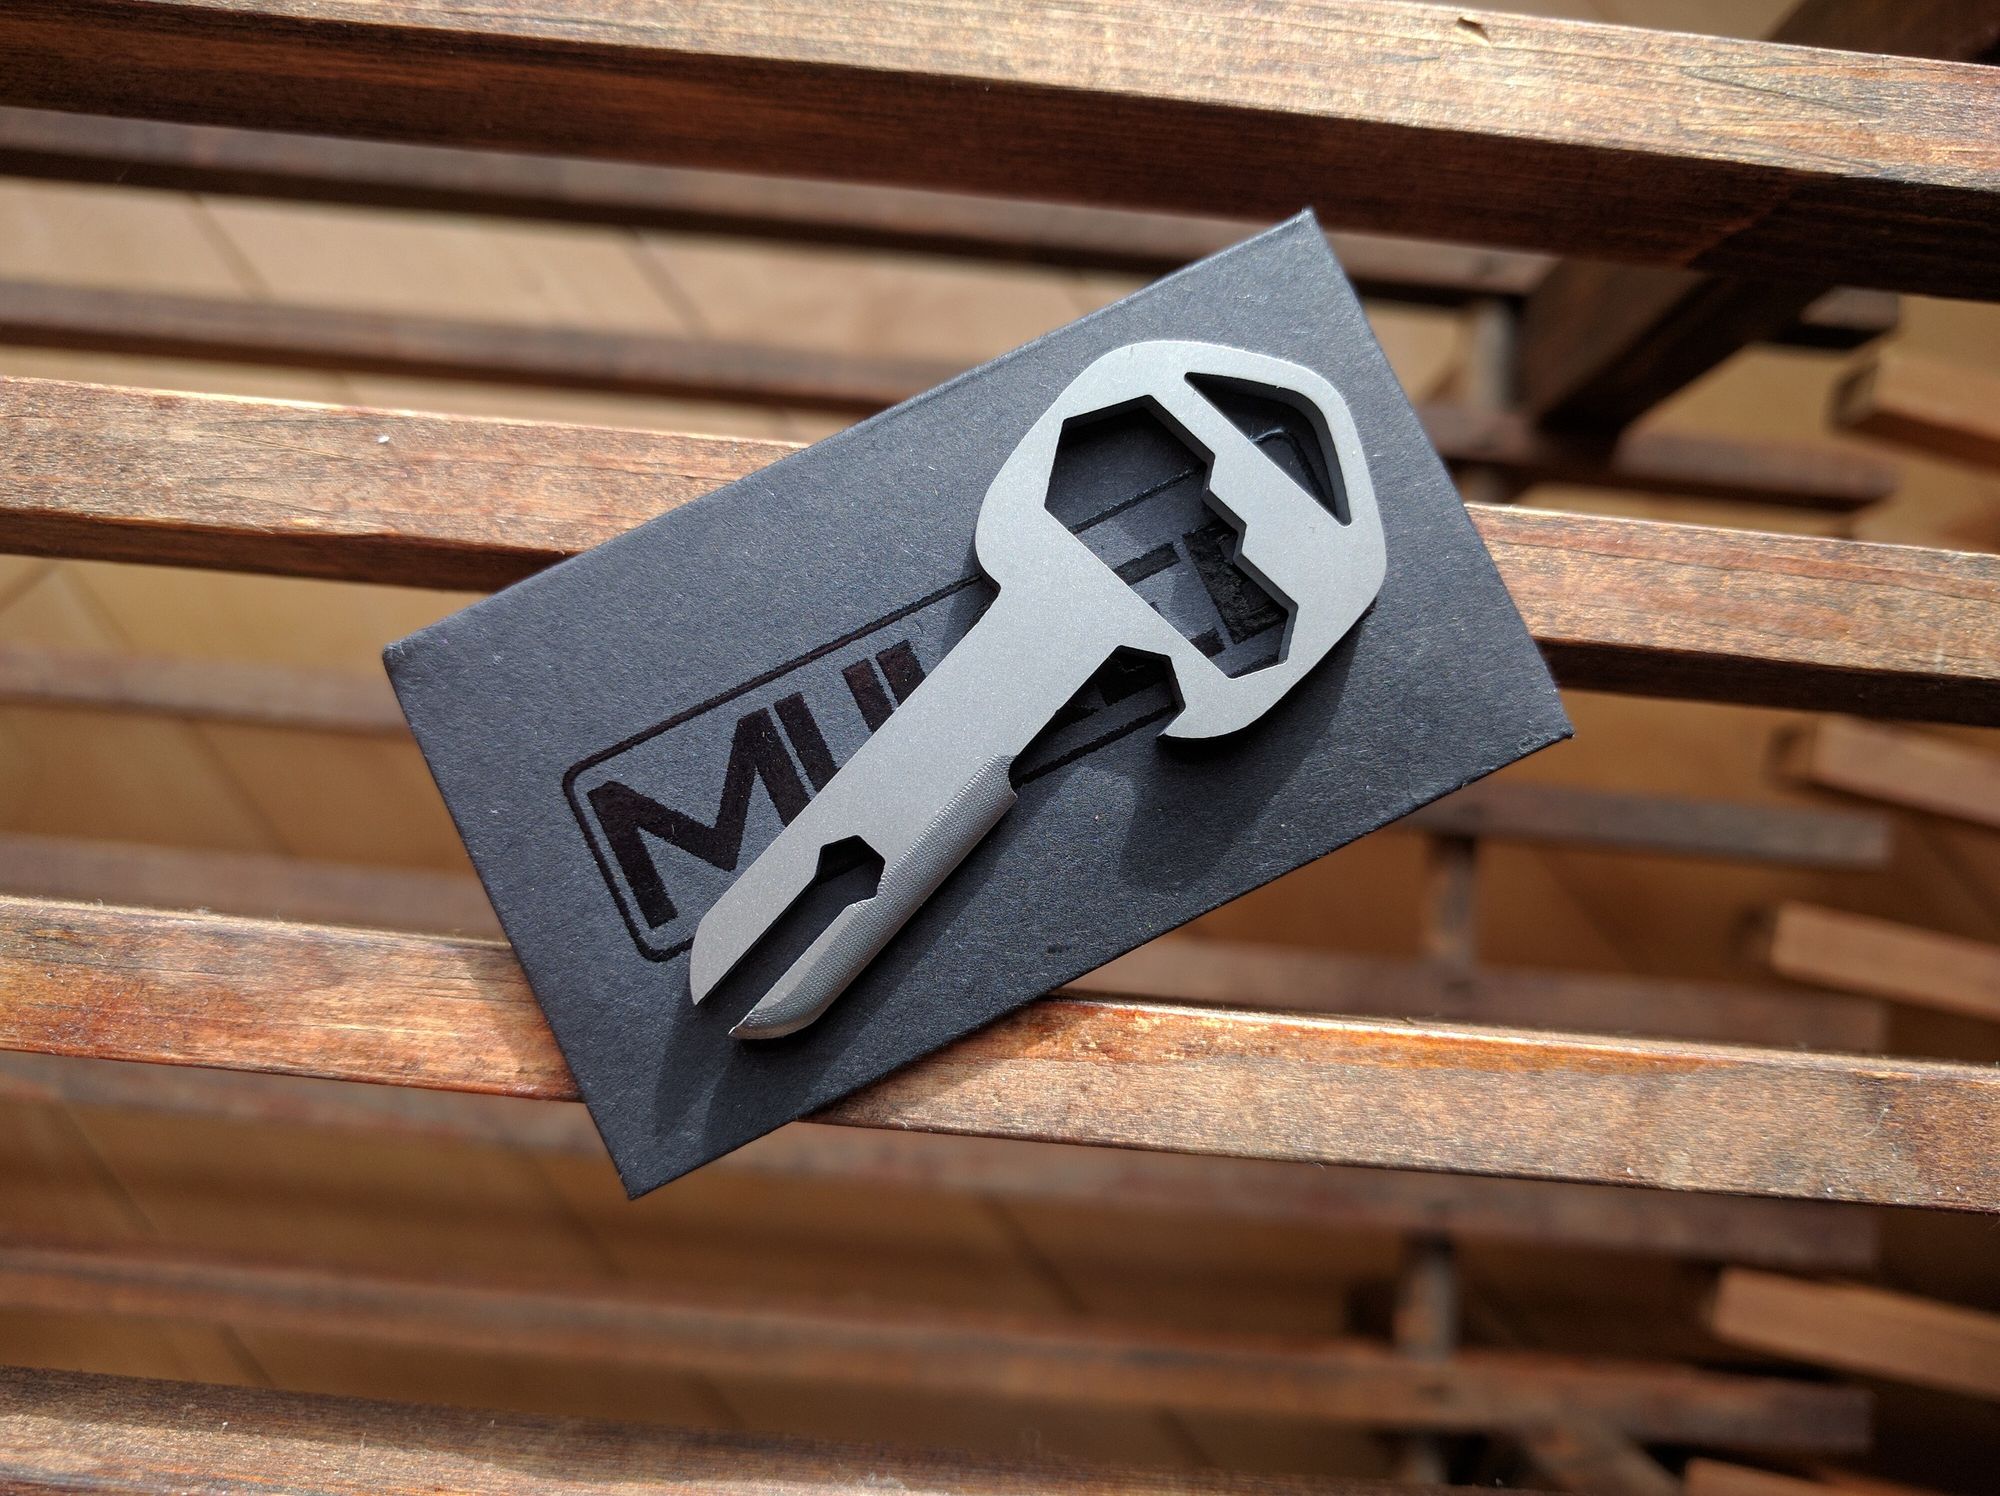 MyKee Titanium Multi-Tool Key Review